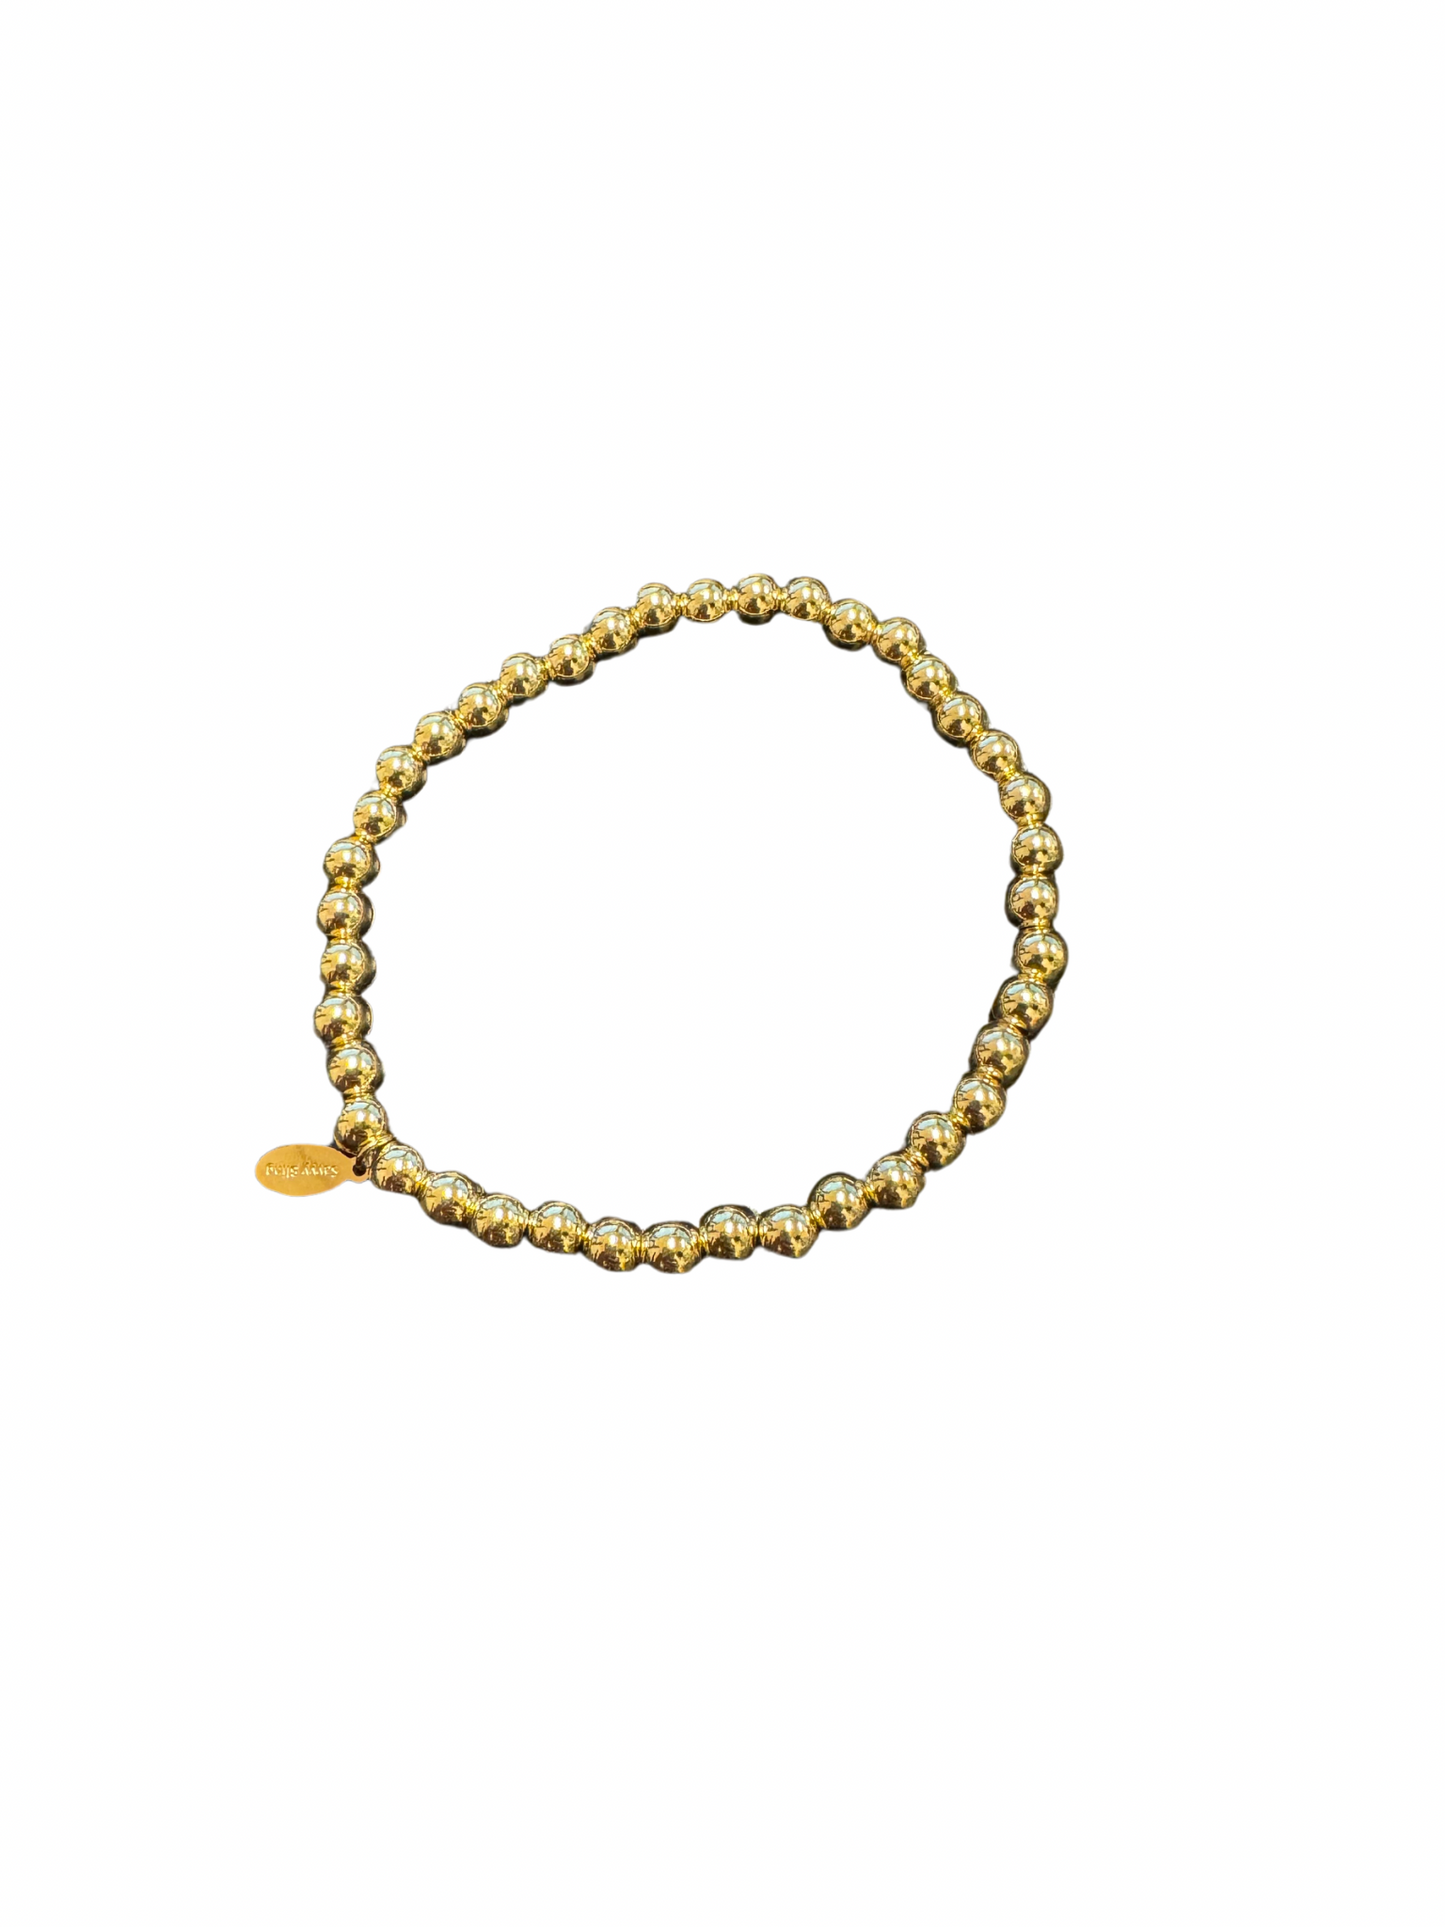 Gold Ball Bracelet- Small